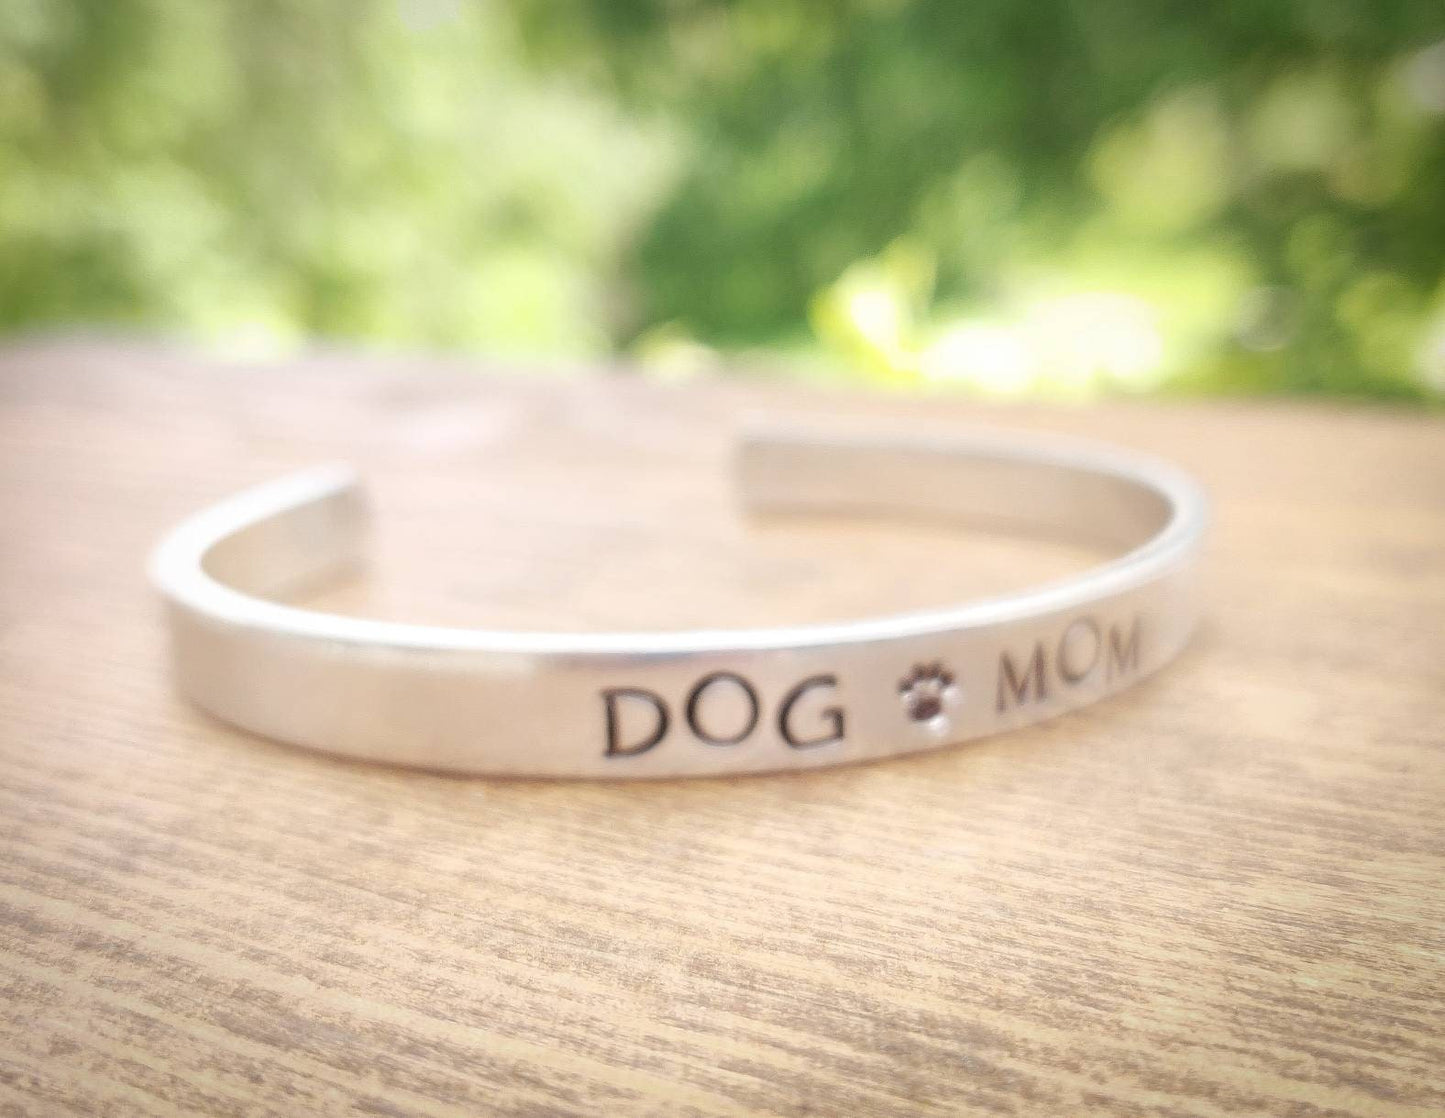 Dog Mom Bracelet, Dog Mom Gift, Dog Mom Jewelry, Paw Print Jewelry, Paw Print Bracelet, Dog Lover Bracelet, Dog Lover Jewelry